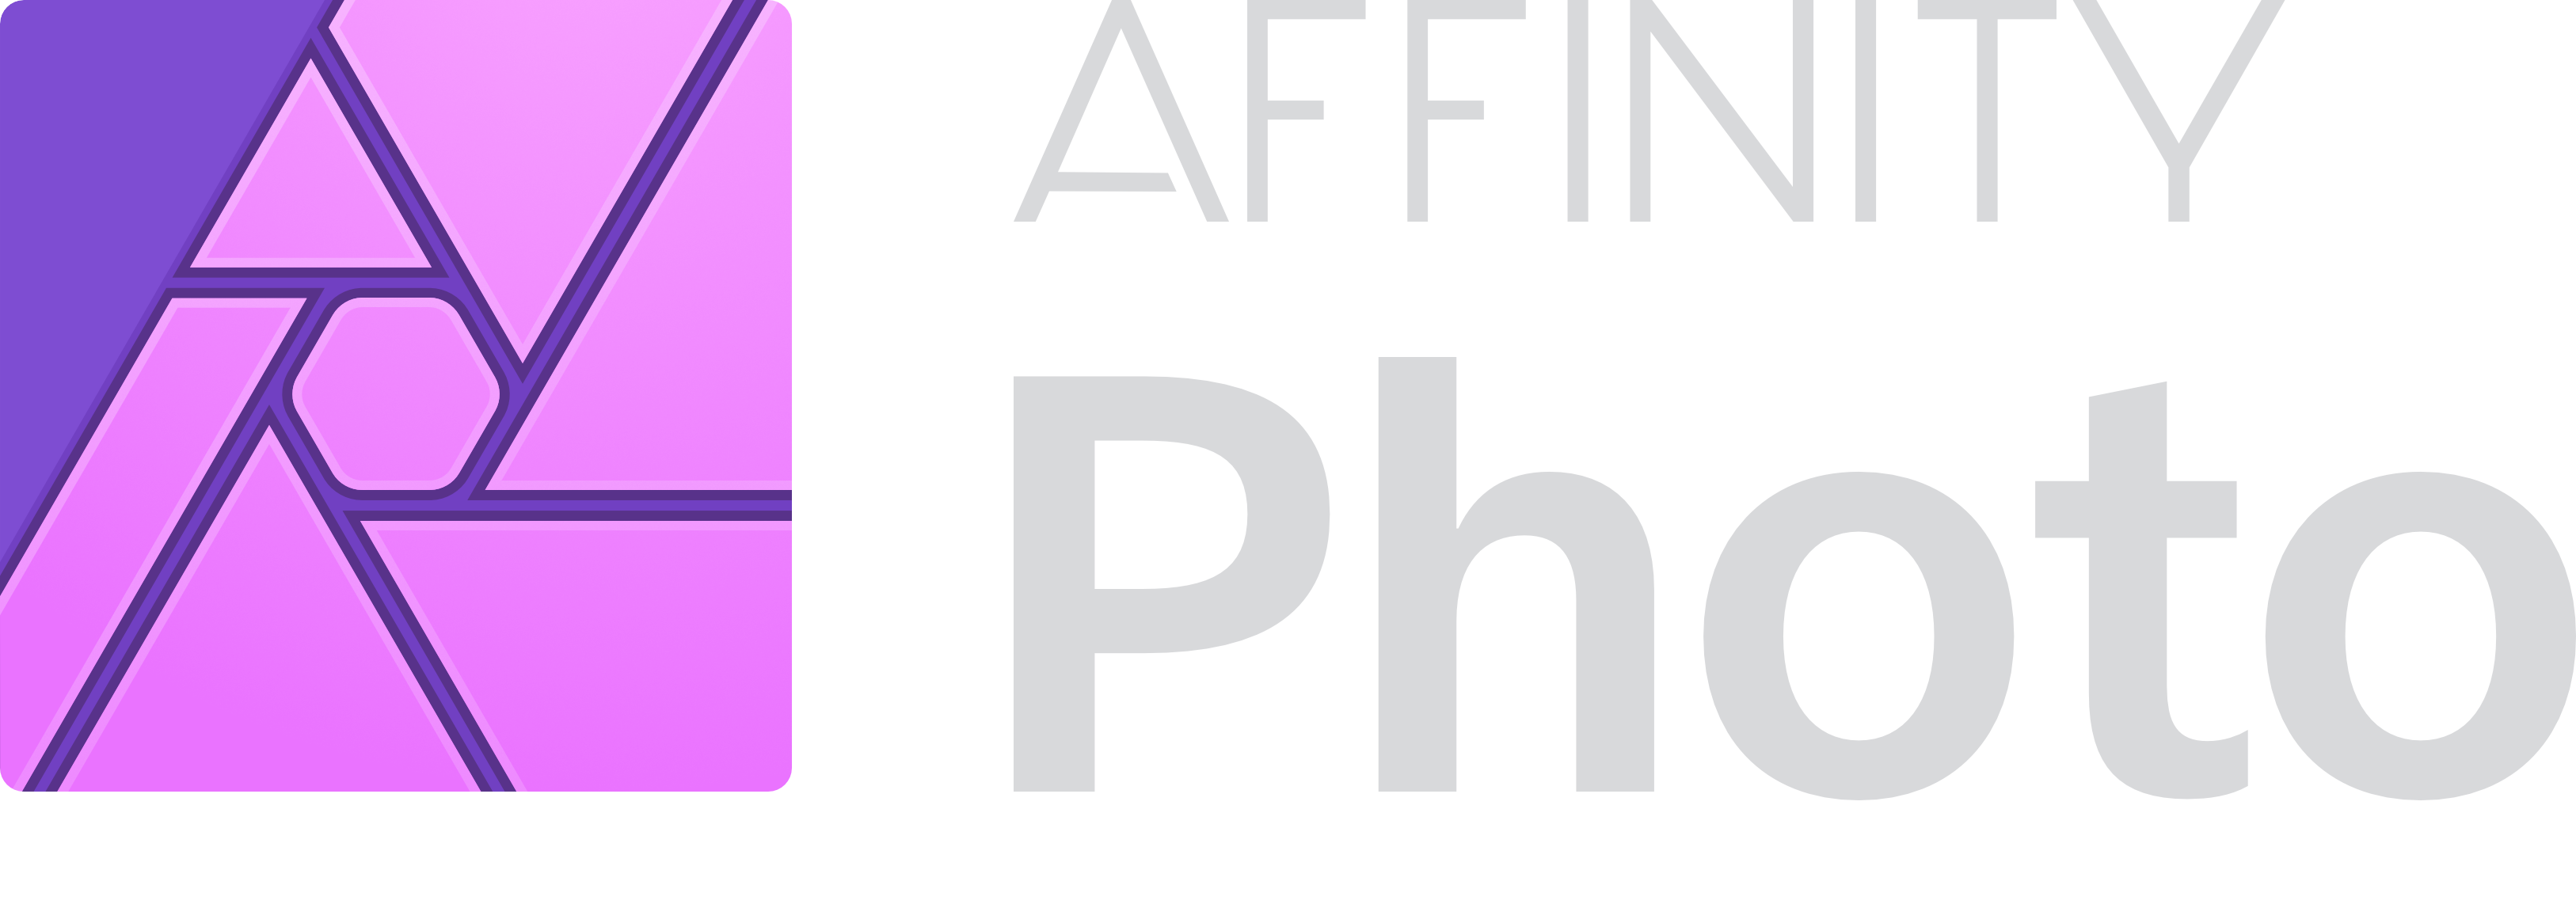 Affinity Photo logo en Compolaser